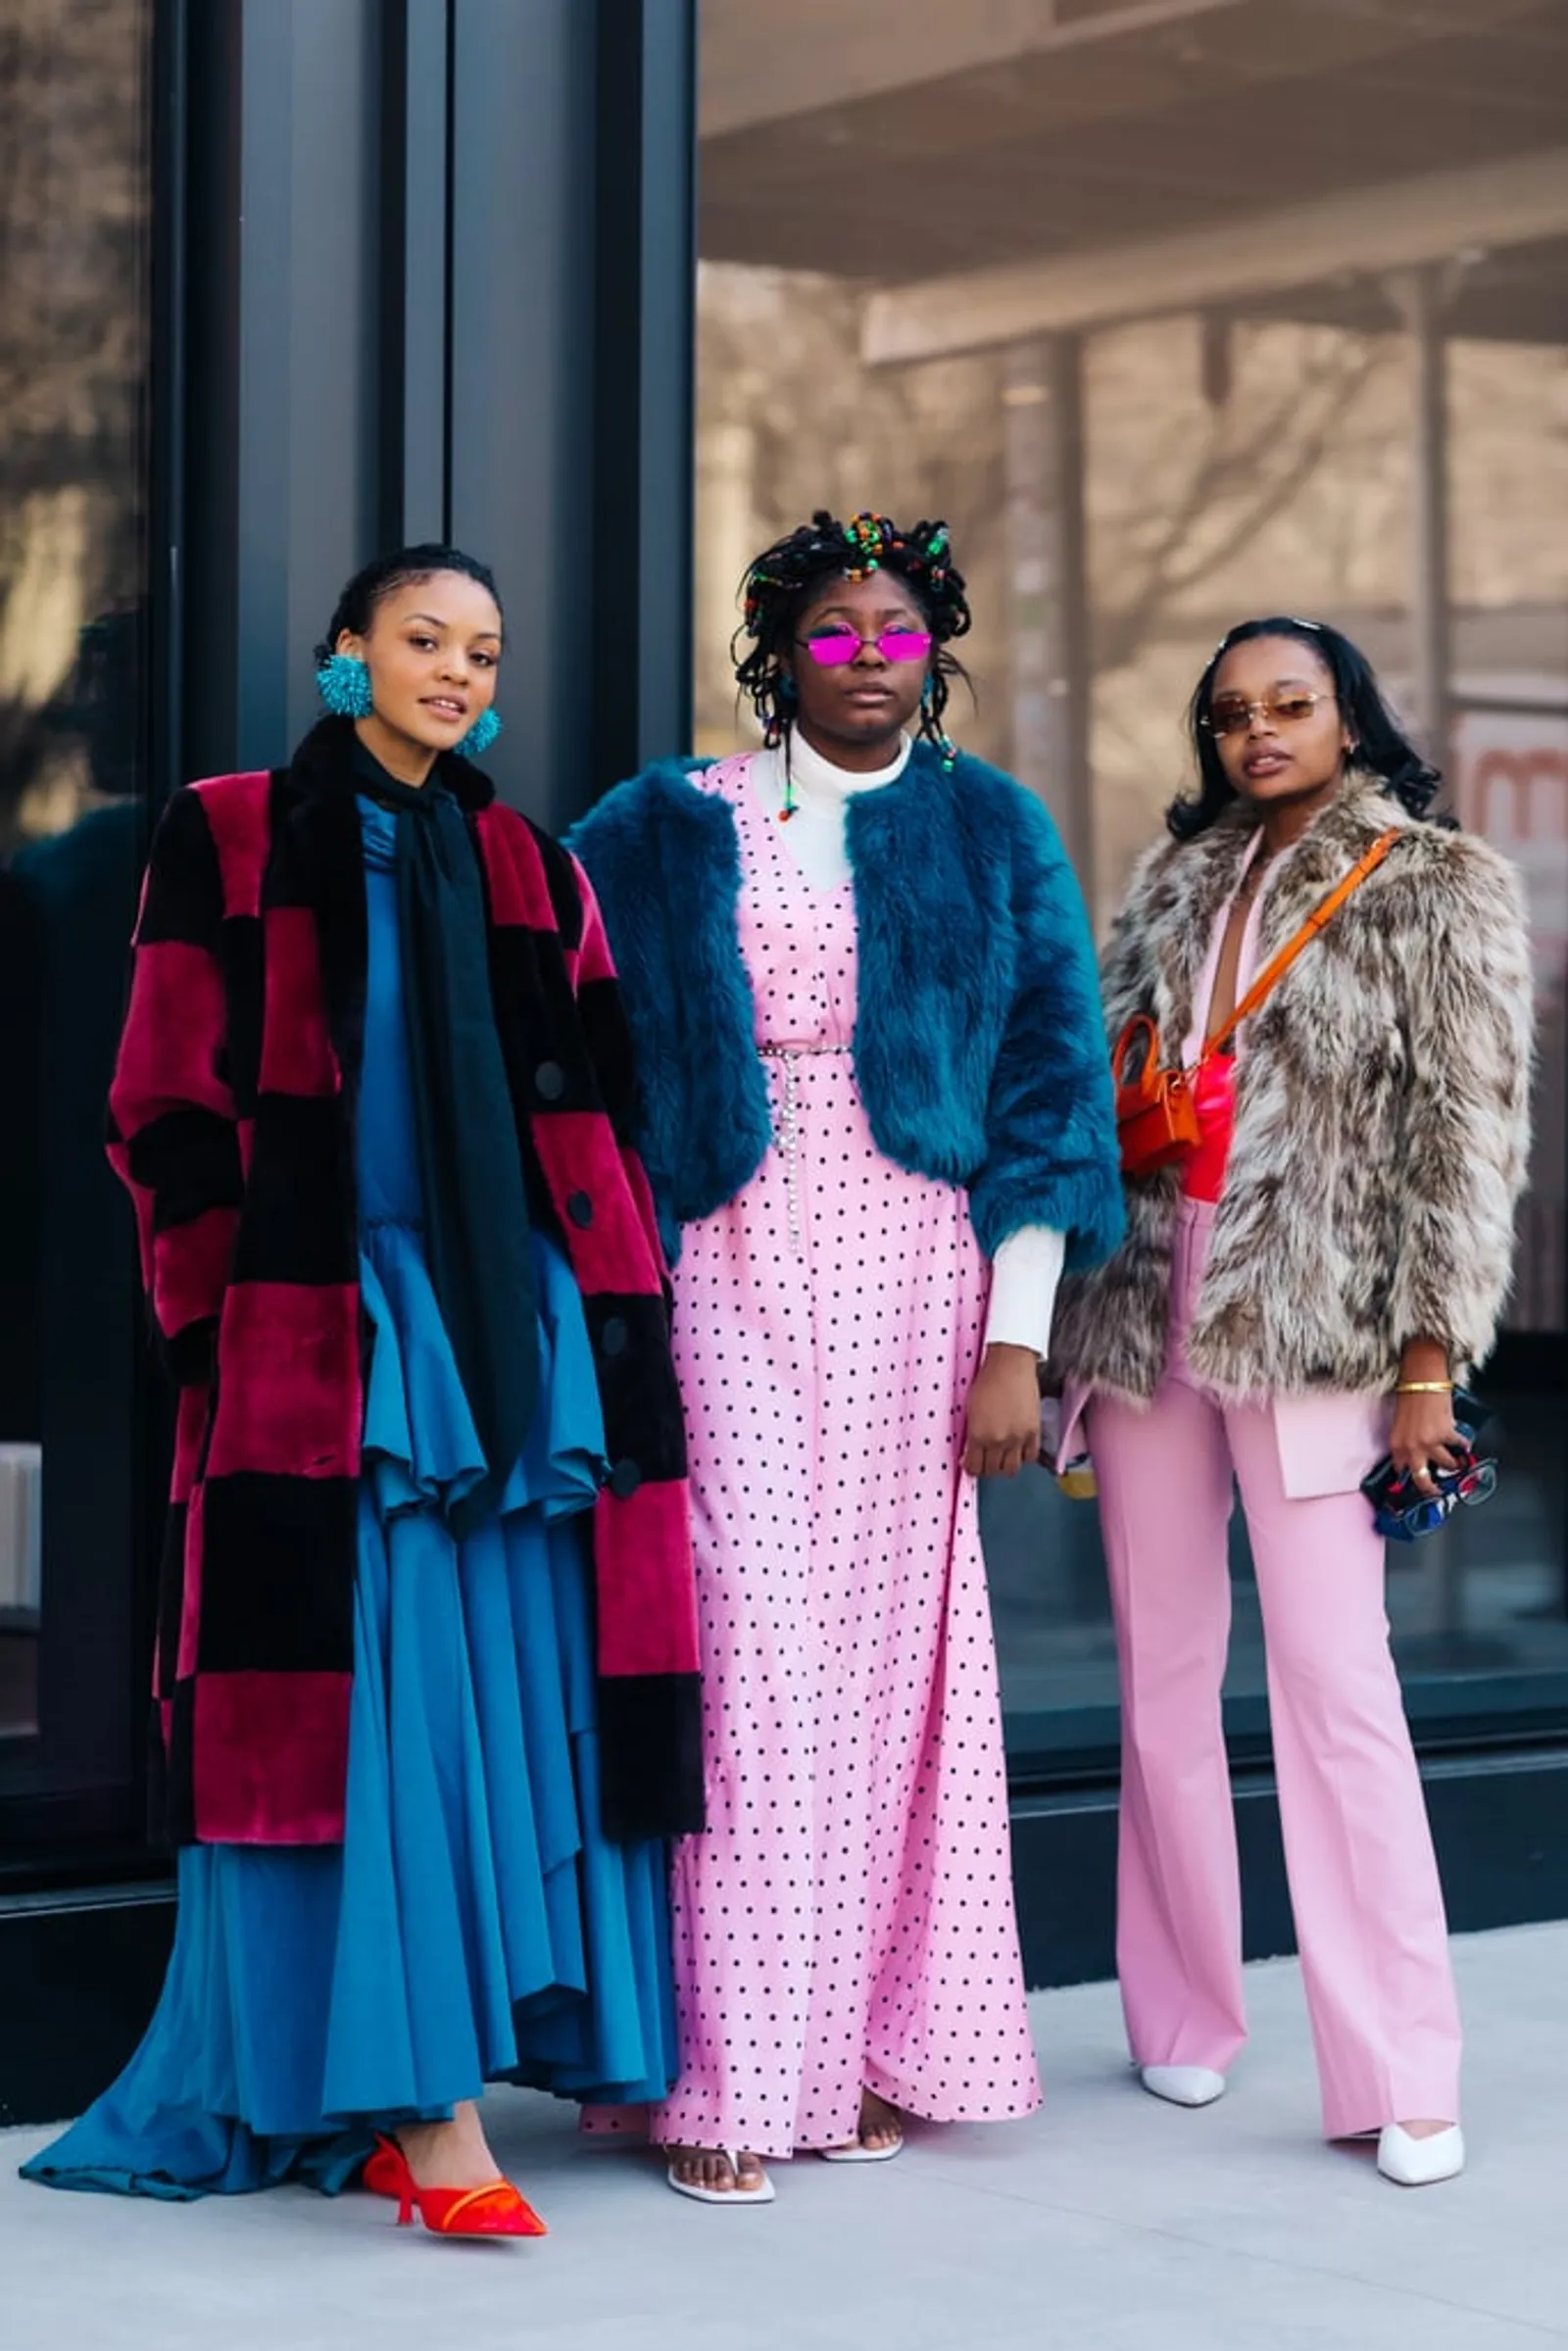 Tips OOTD Pakai Statement Coat a La Street Style di Fashion Week